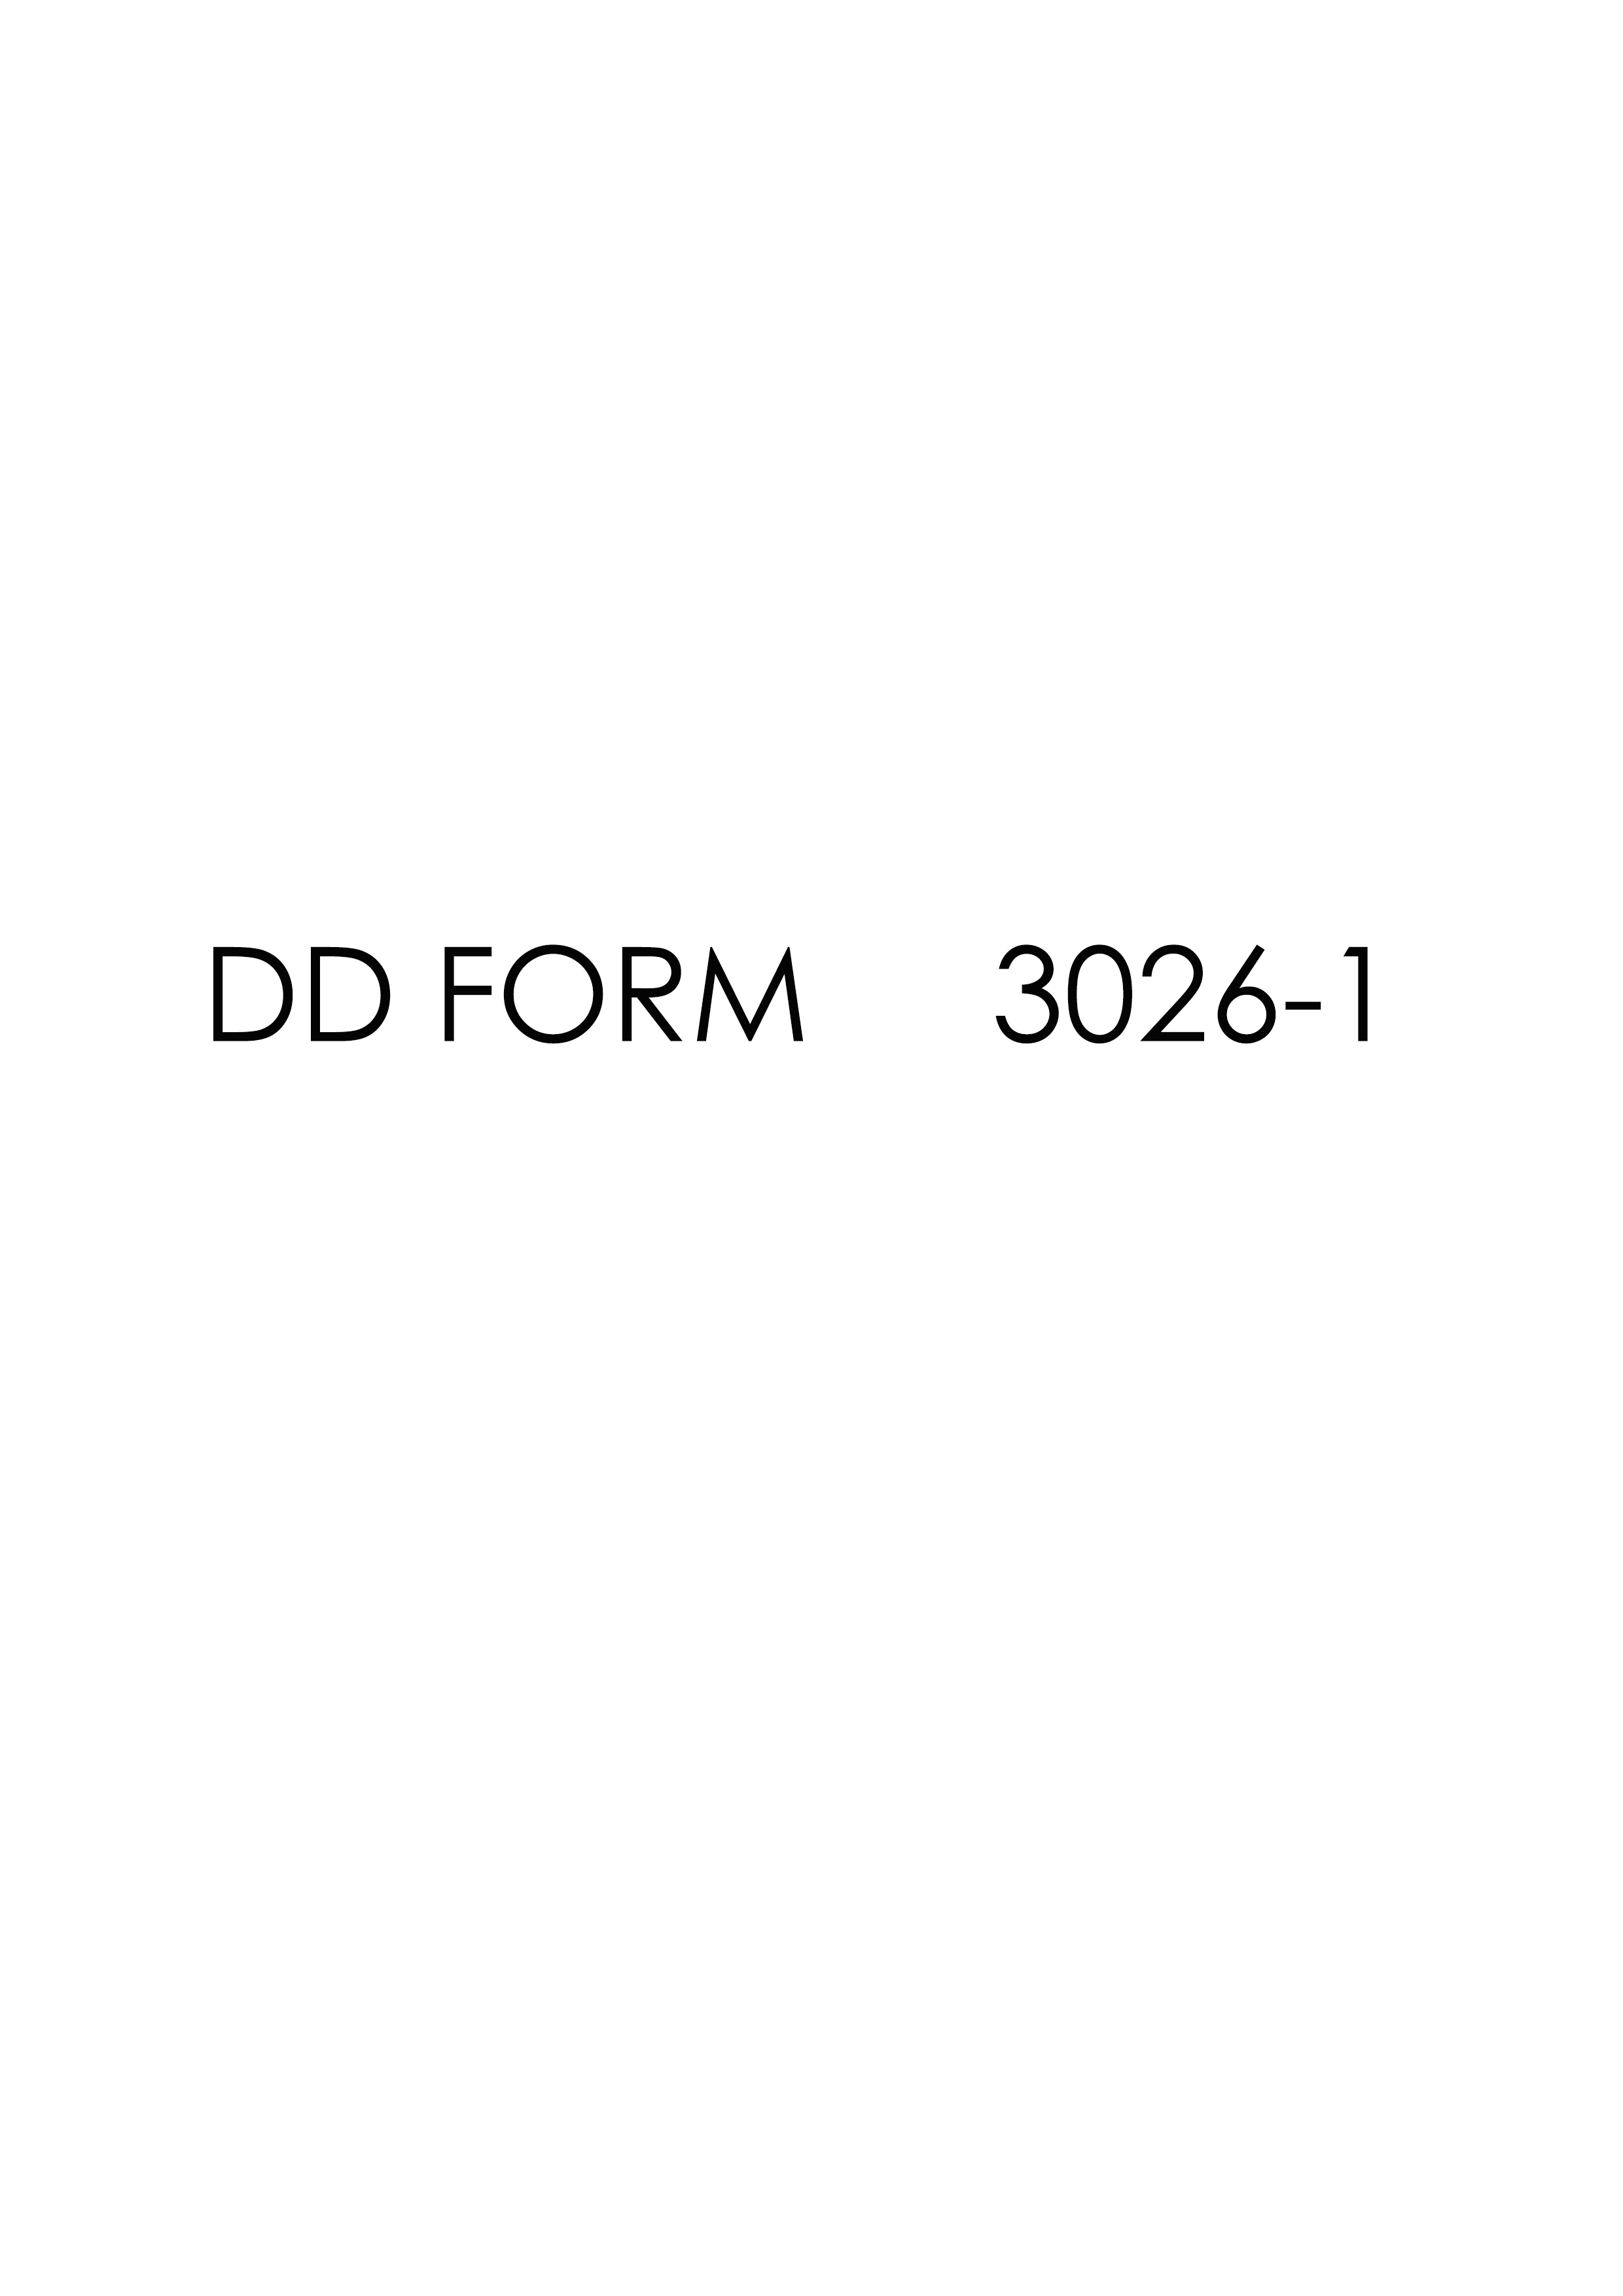 Download dd 3026-1 Form